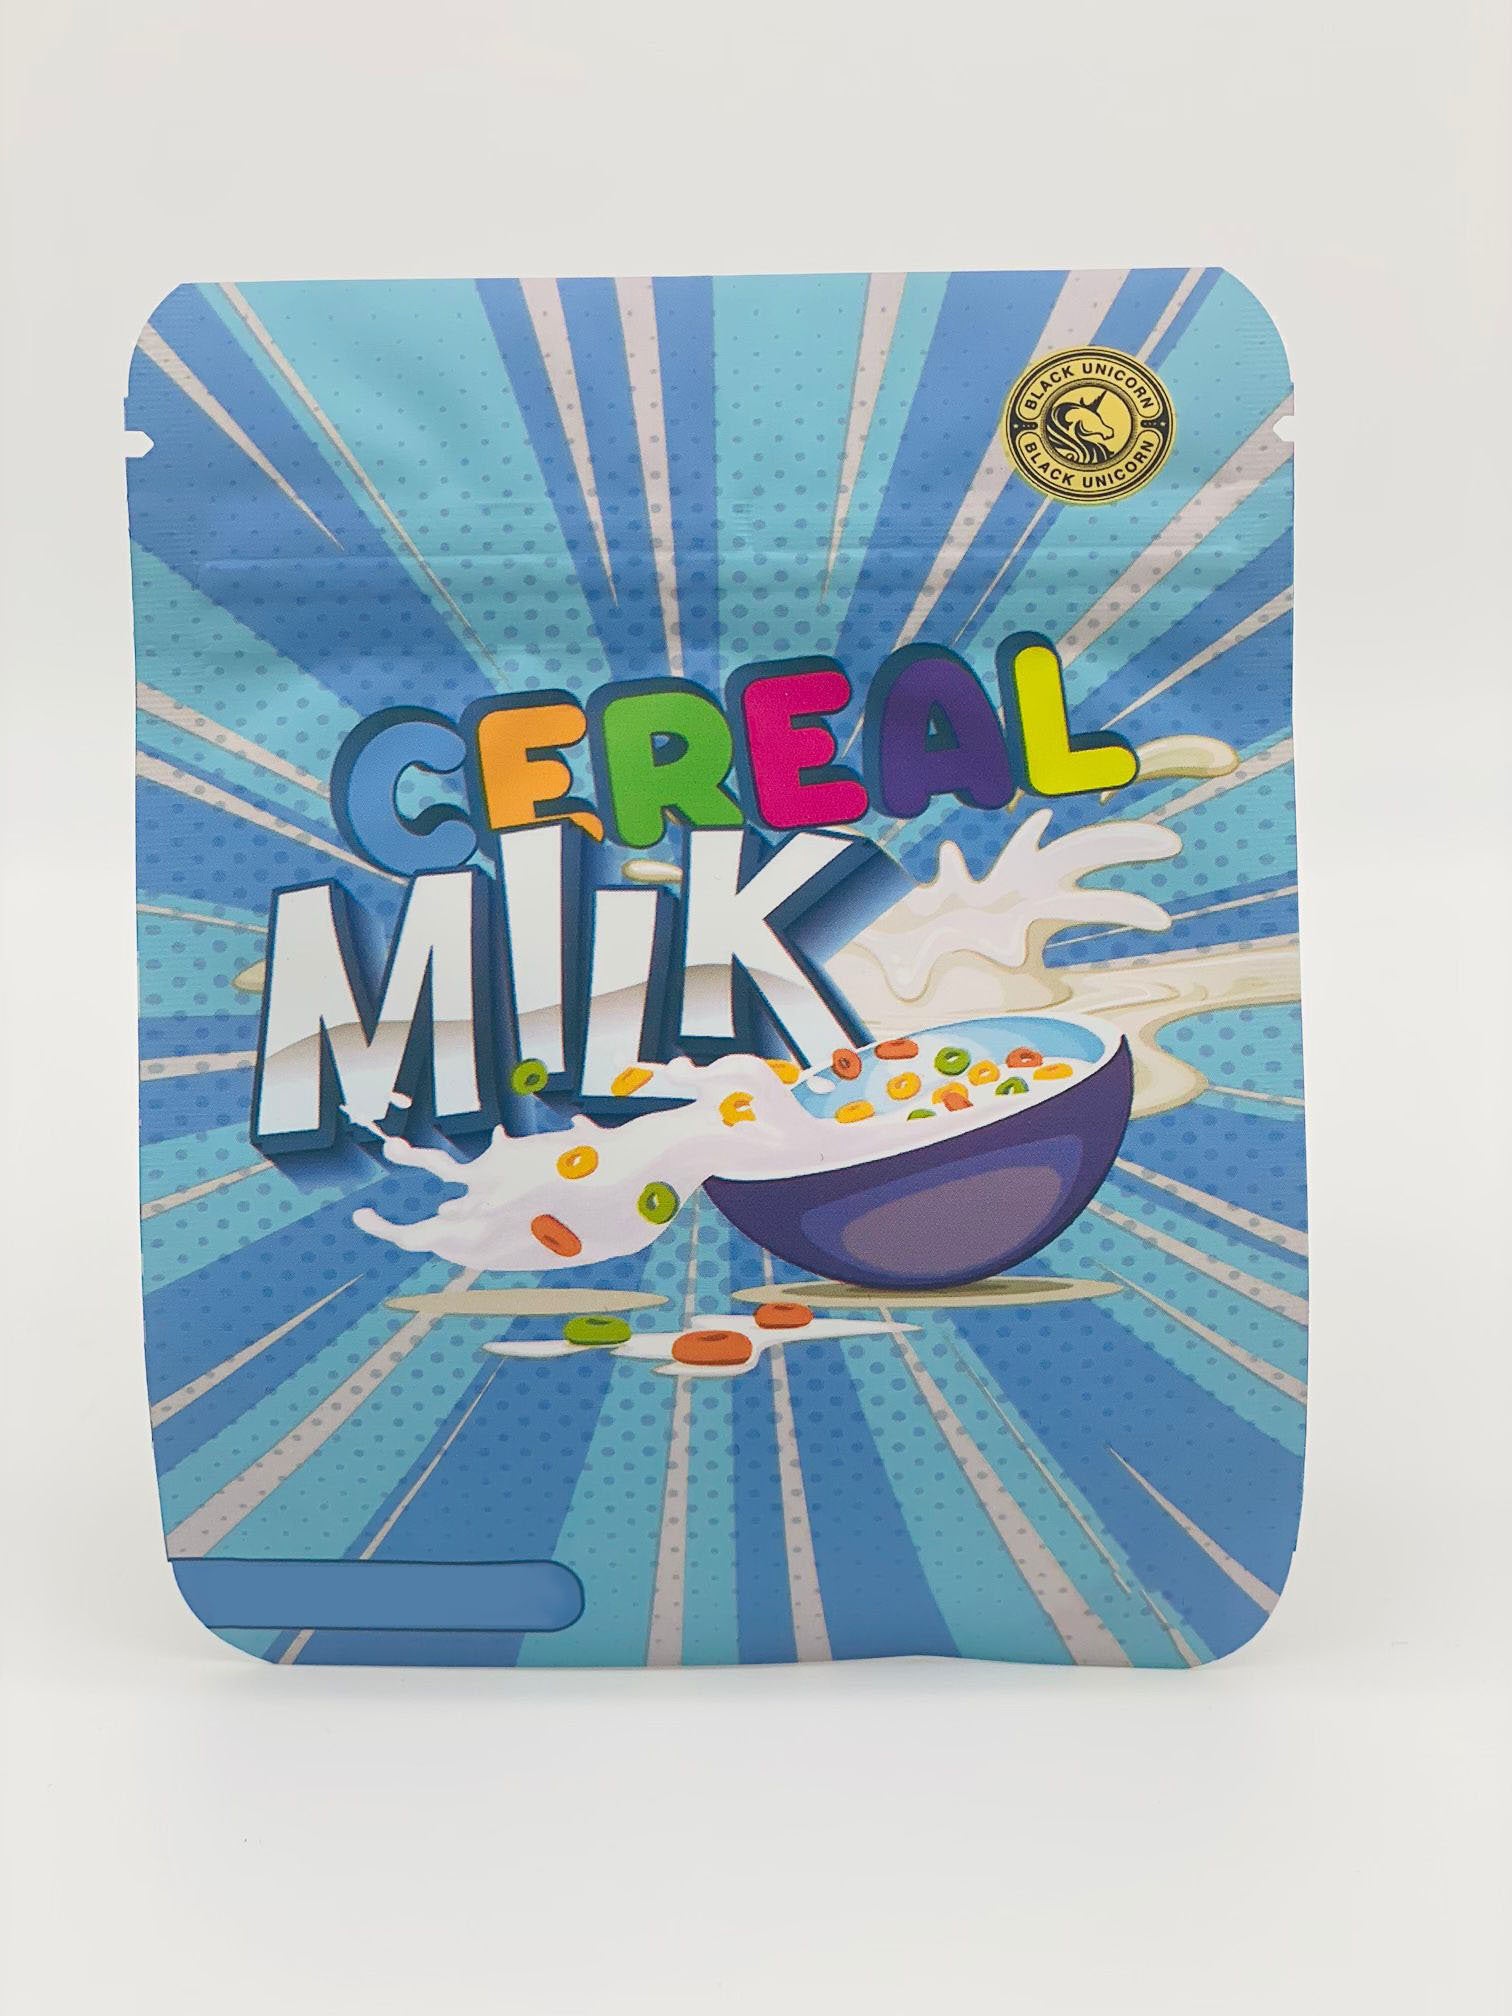 Cereal Milk 3.5 gram Empty Bags 3.5 gram – My mylarbag